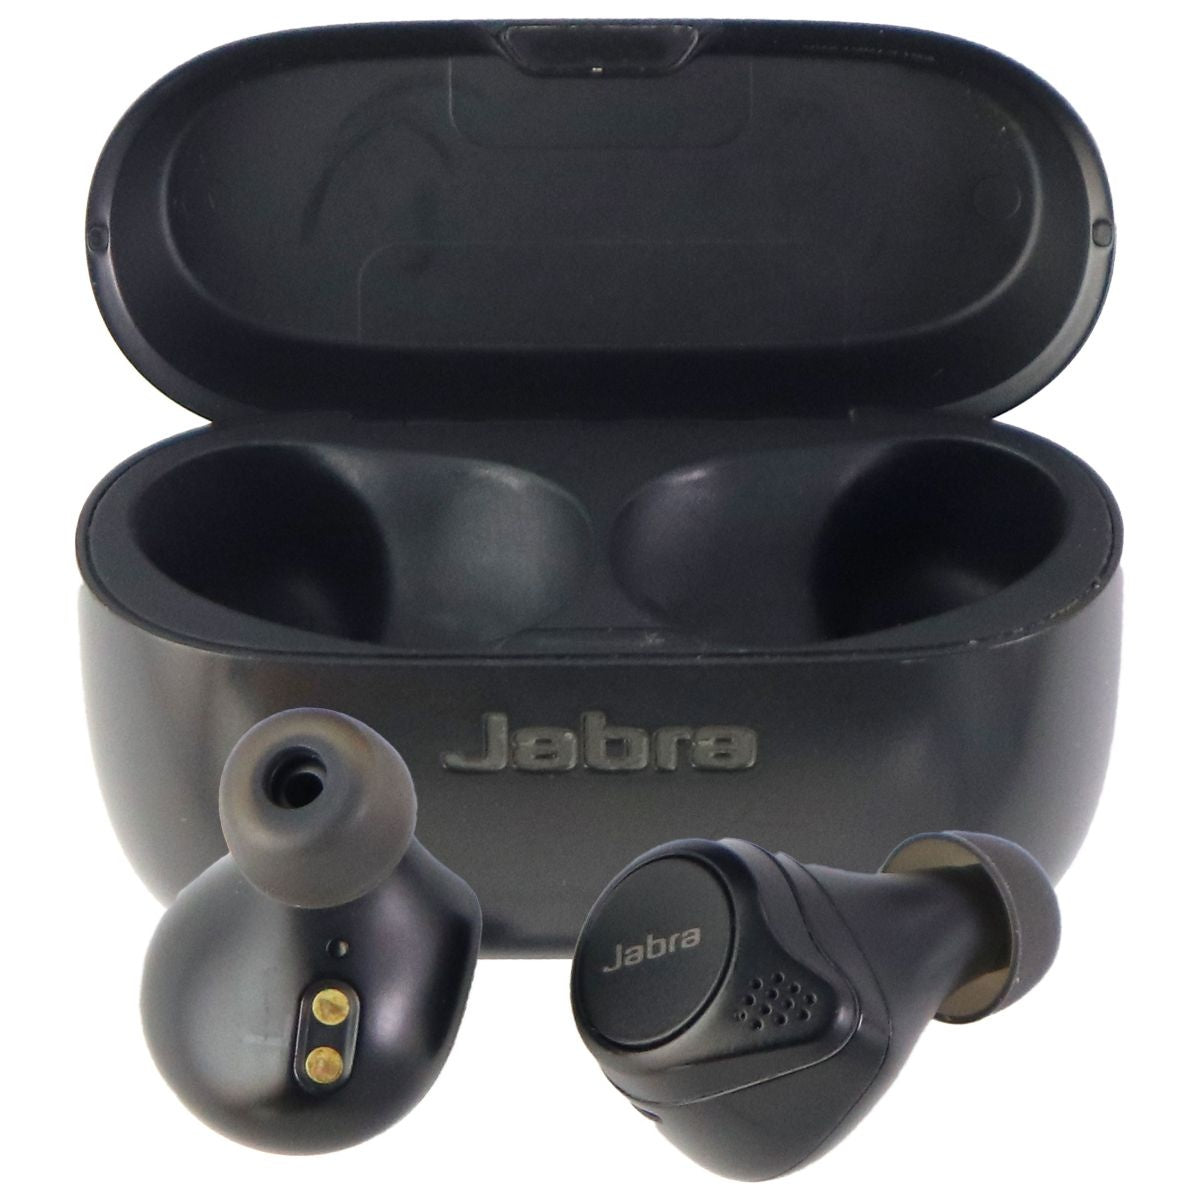 Jabra Elite 75t Wireless Earbuds with Charging Case - Black Portable Audio - Headphones Jabra    - Simple Cell Bulk Wholesale Pricing - USA Seller